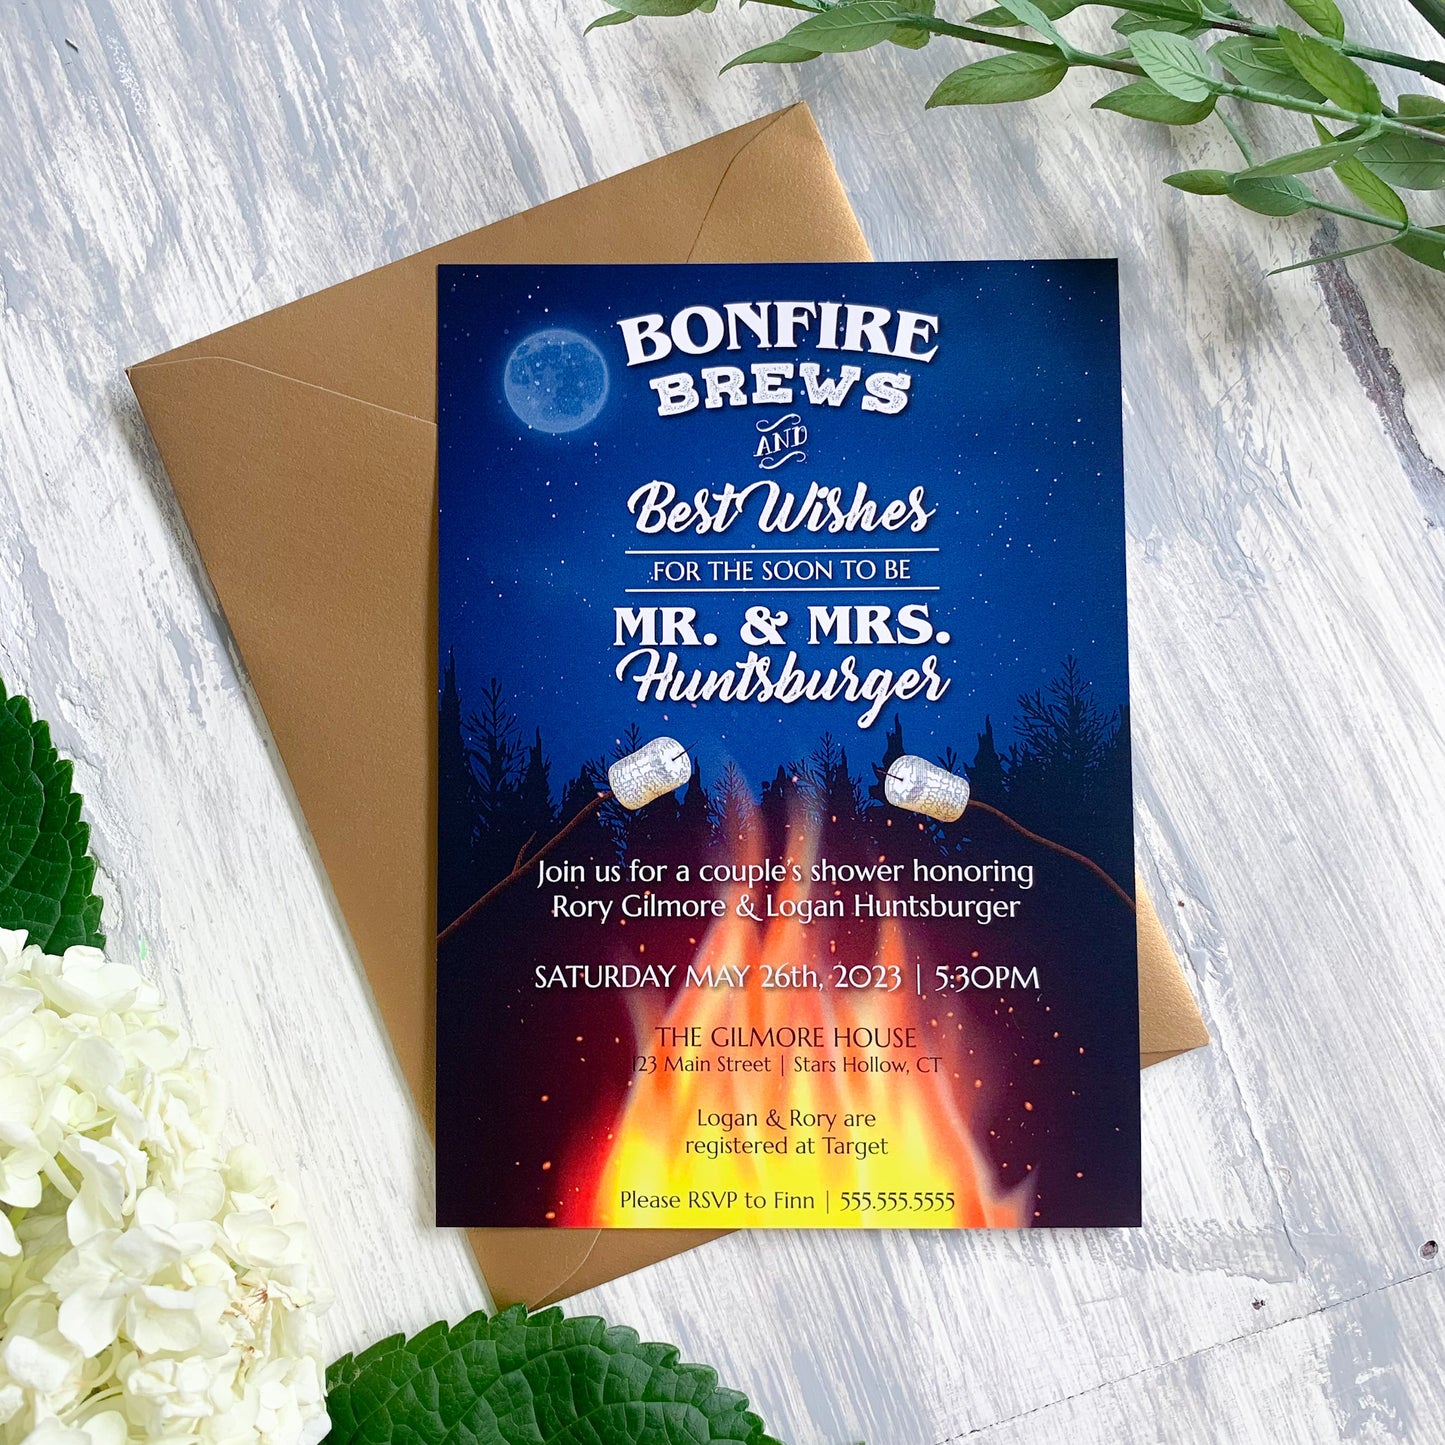 Bonfire & Brews Couple's Wedding Shower Invitation